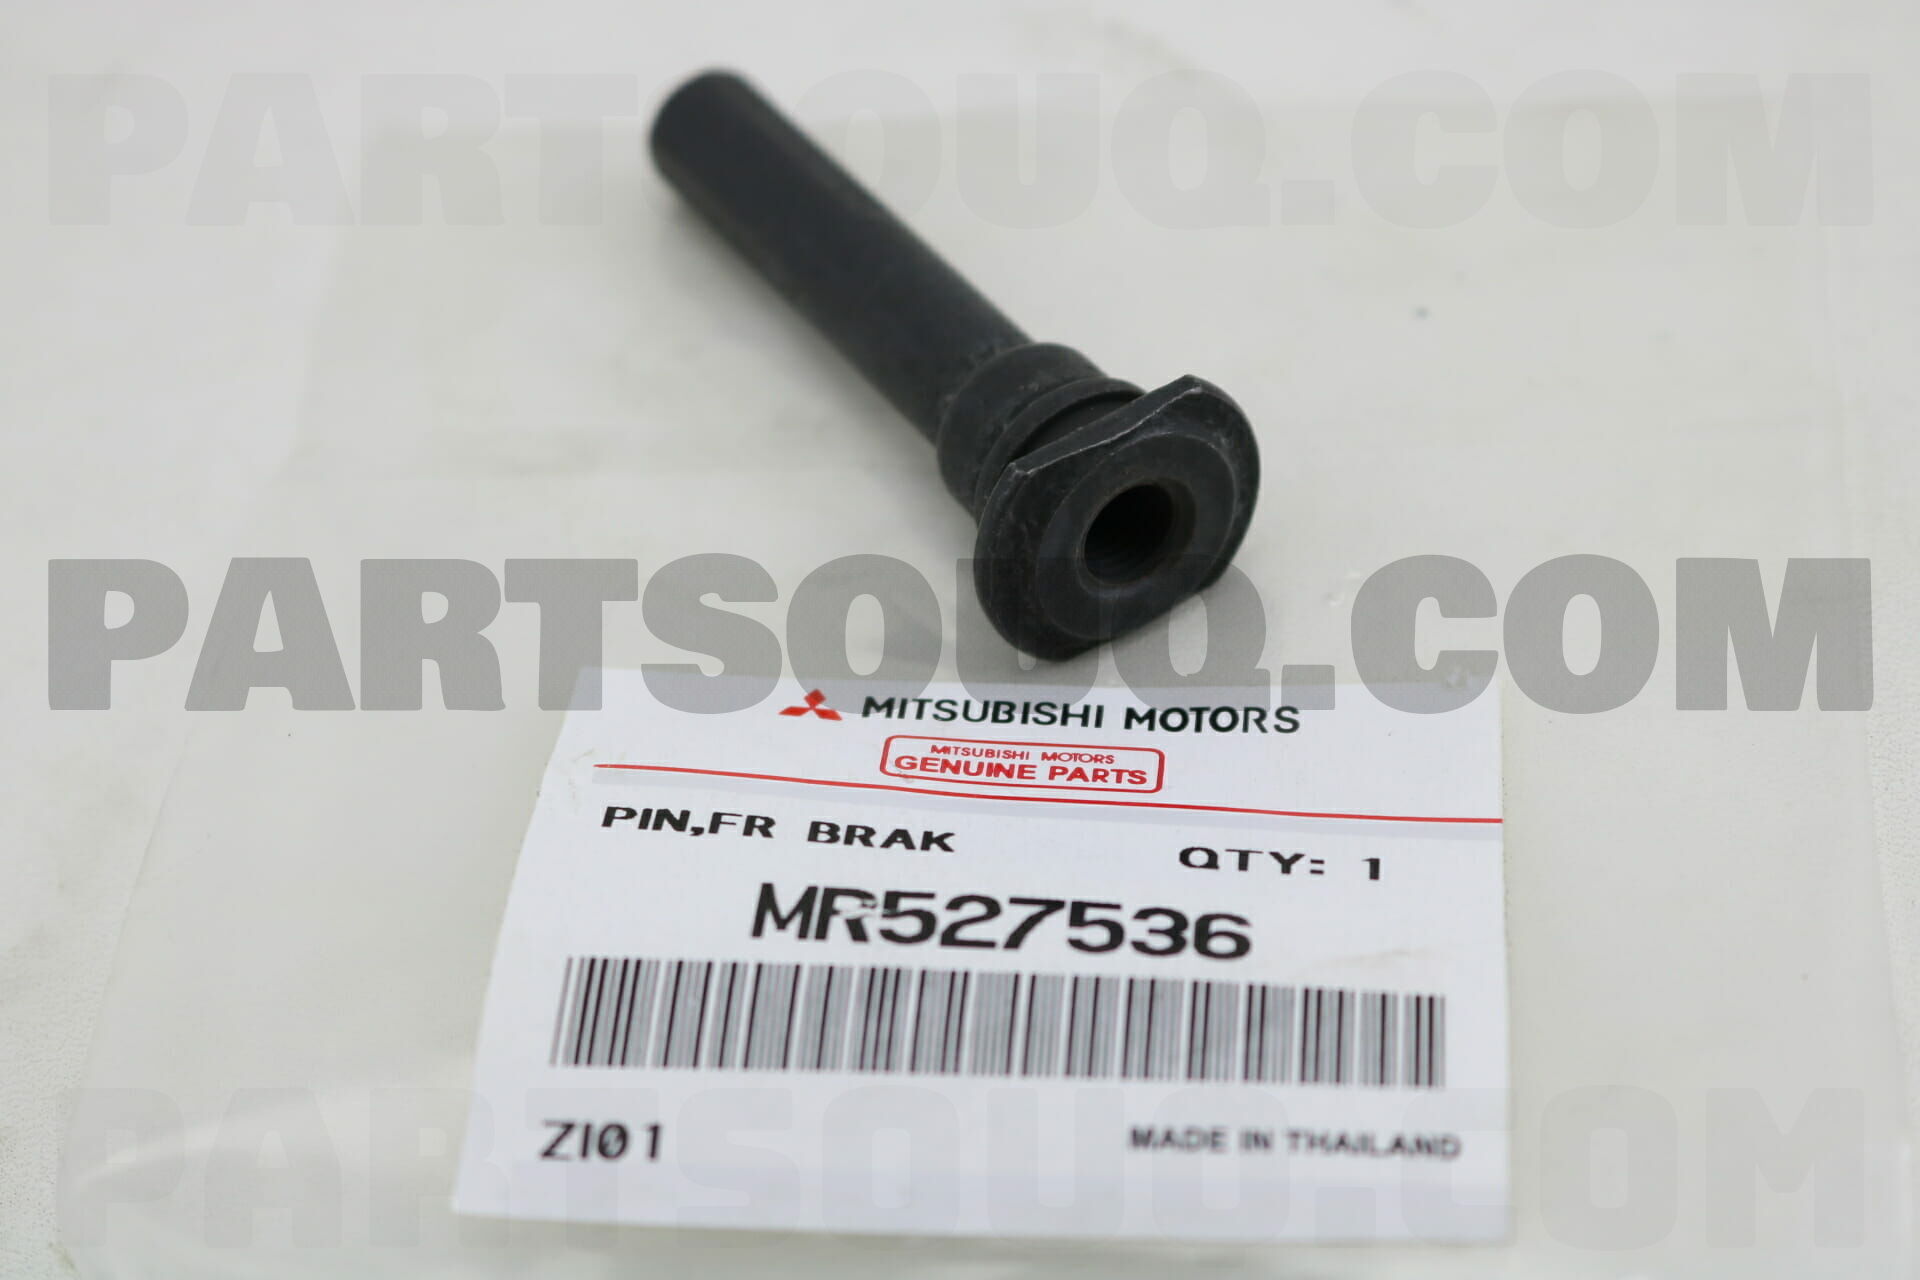 PIN,FR BRAKE MR527536 | Mitsubishi Parts | PartSouq